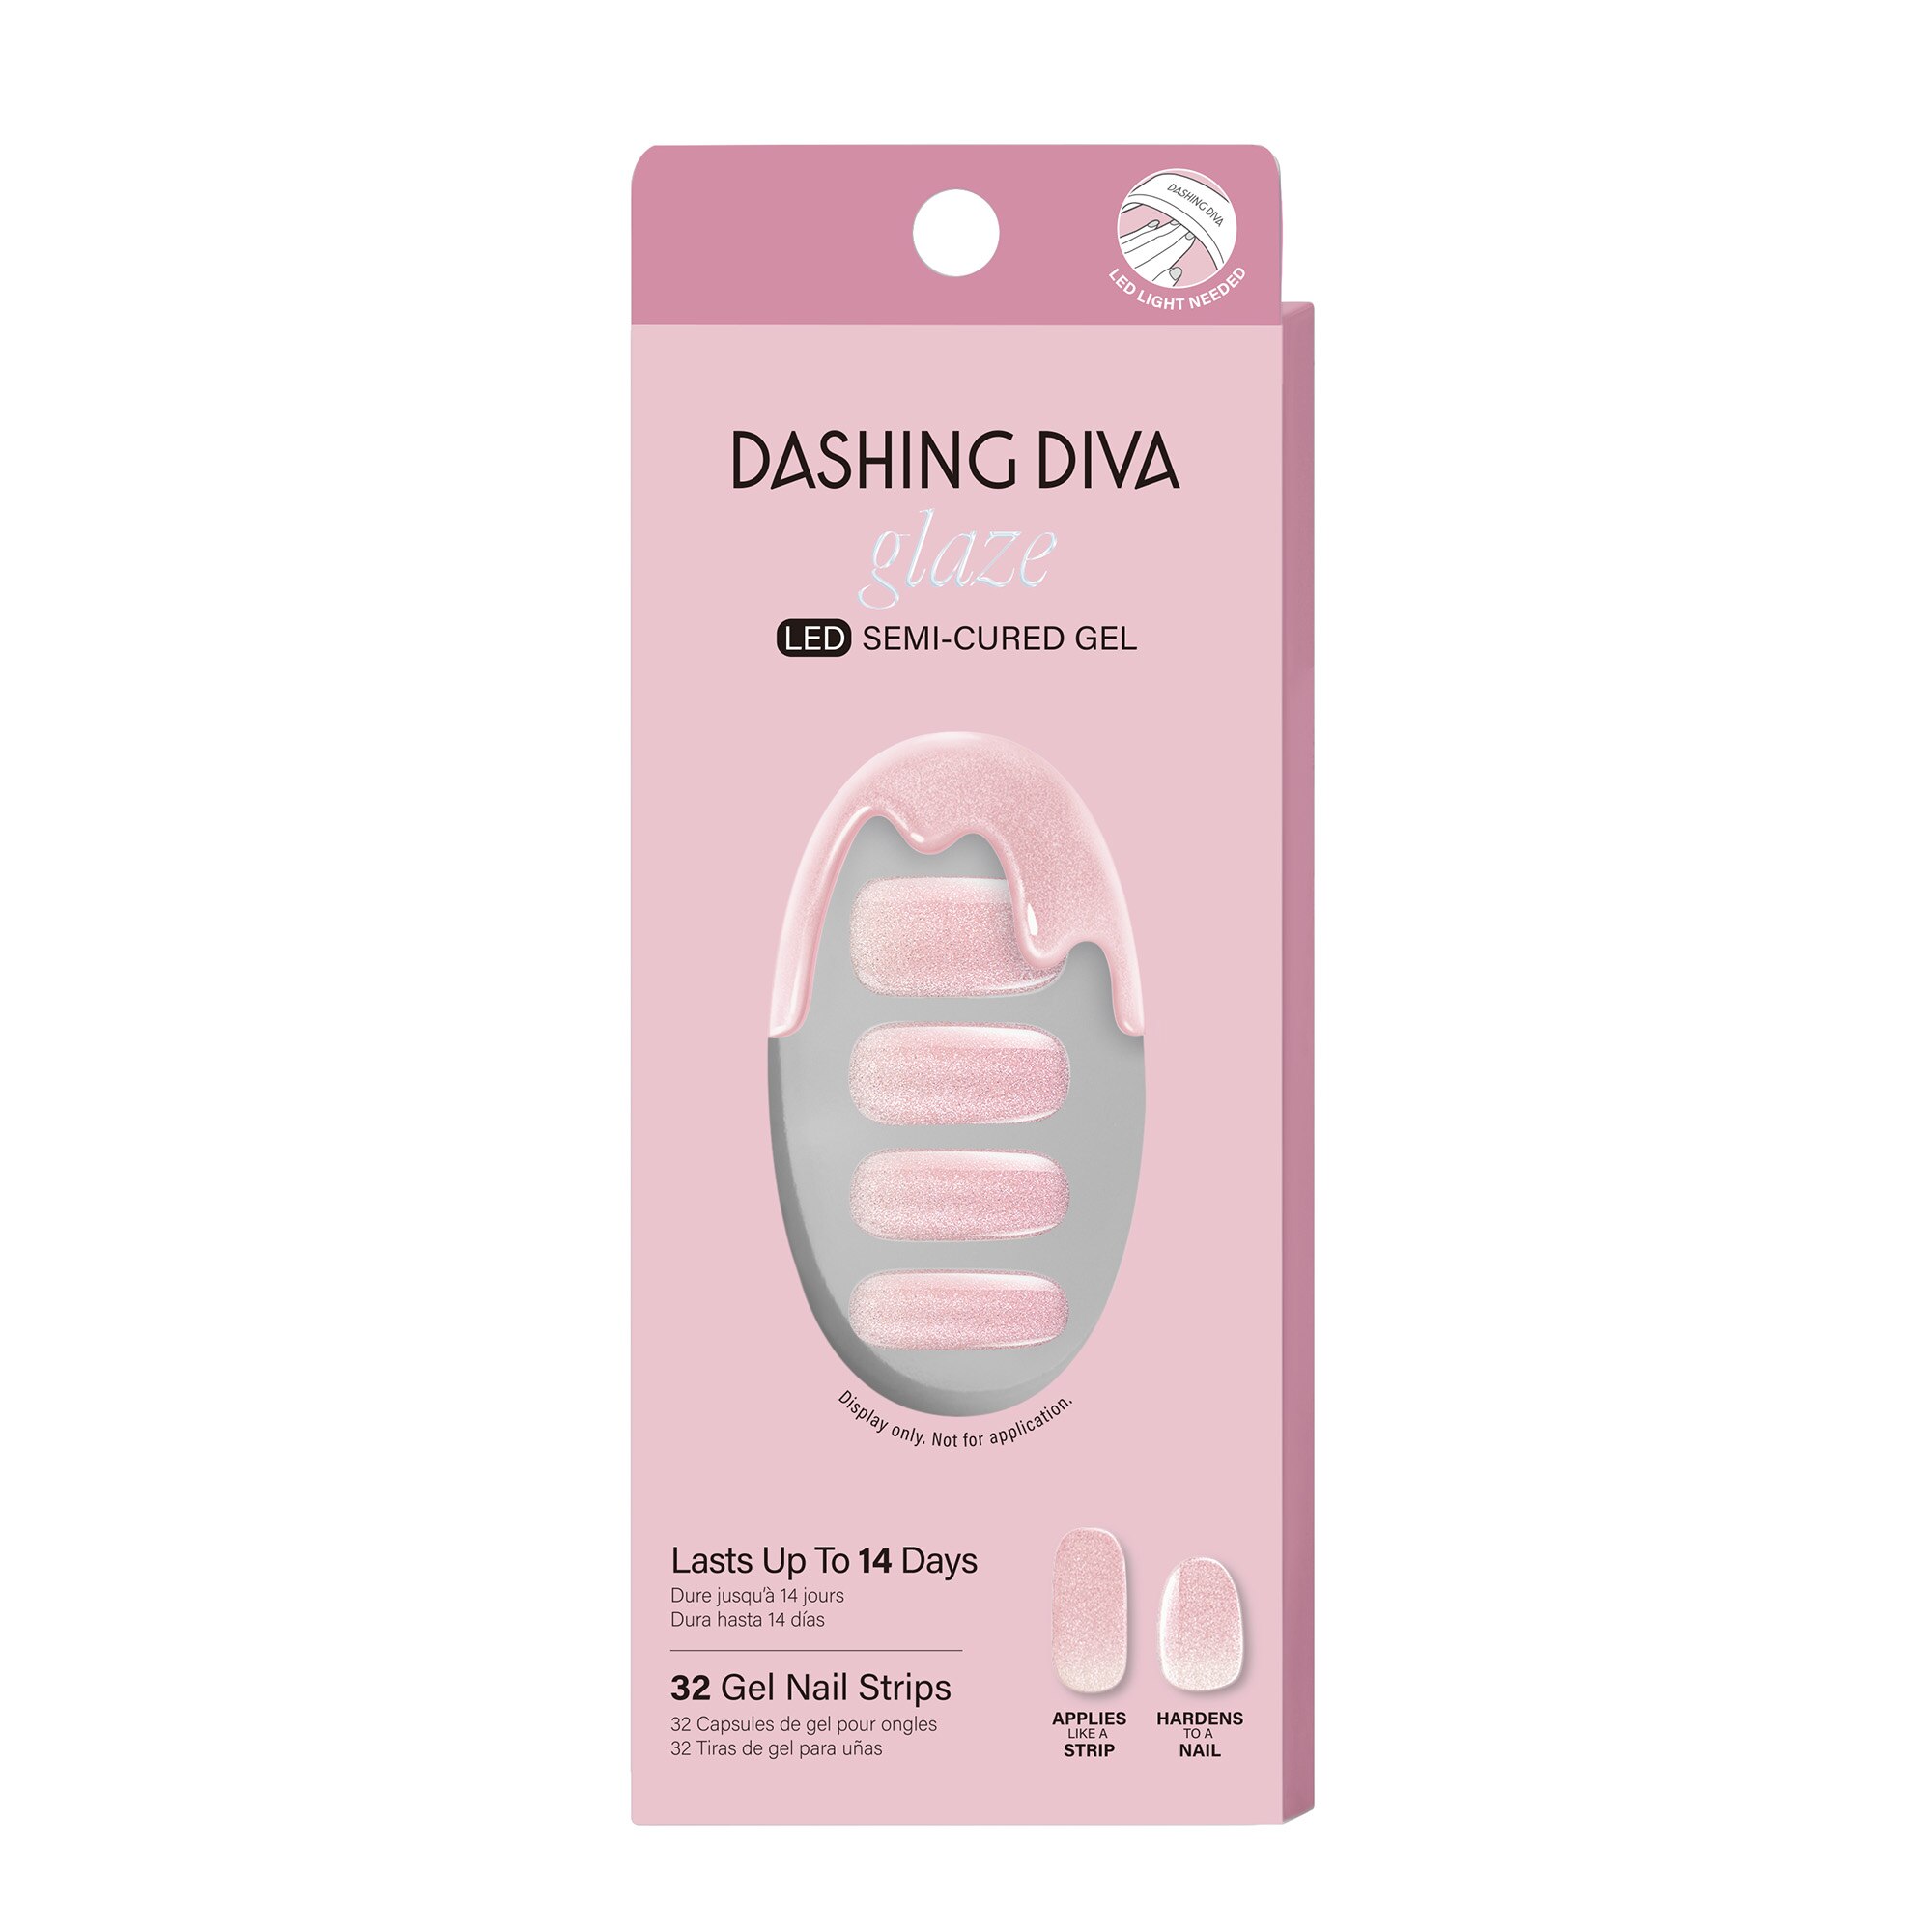 Dashing Diva Glaze Gel Art Studio False Nails, BALL - 32 Ct , CVS